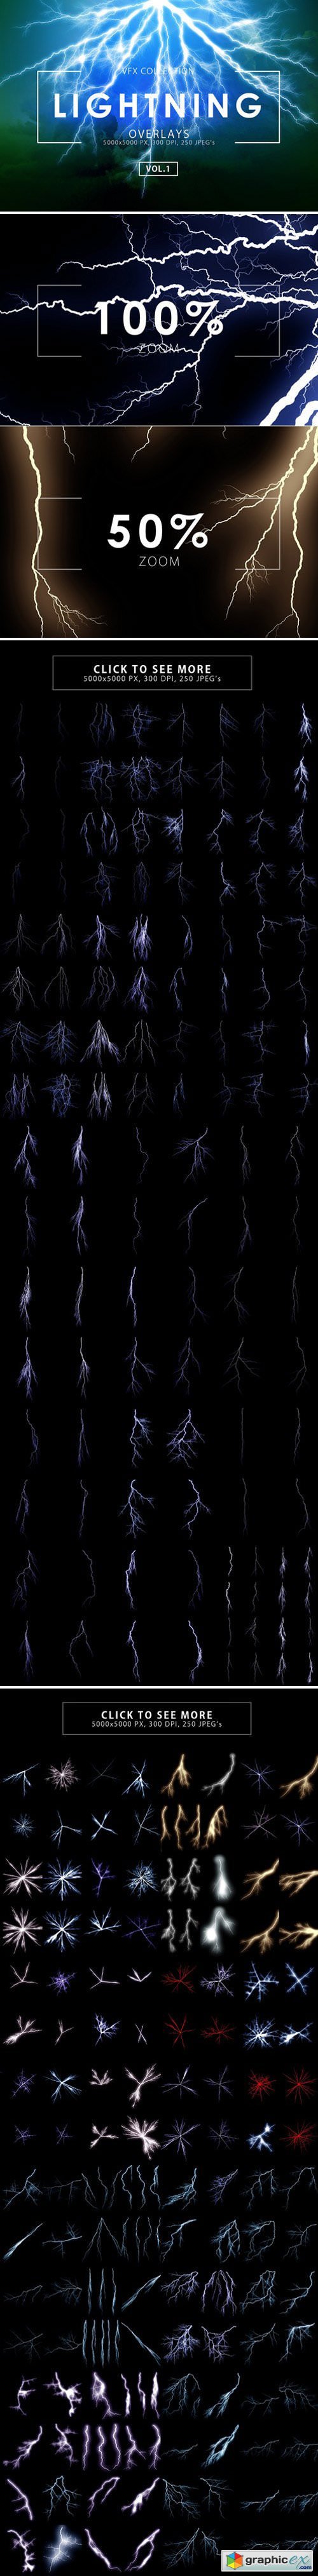 Lightning Effect Overlays Vol. 1